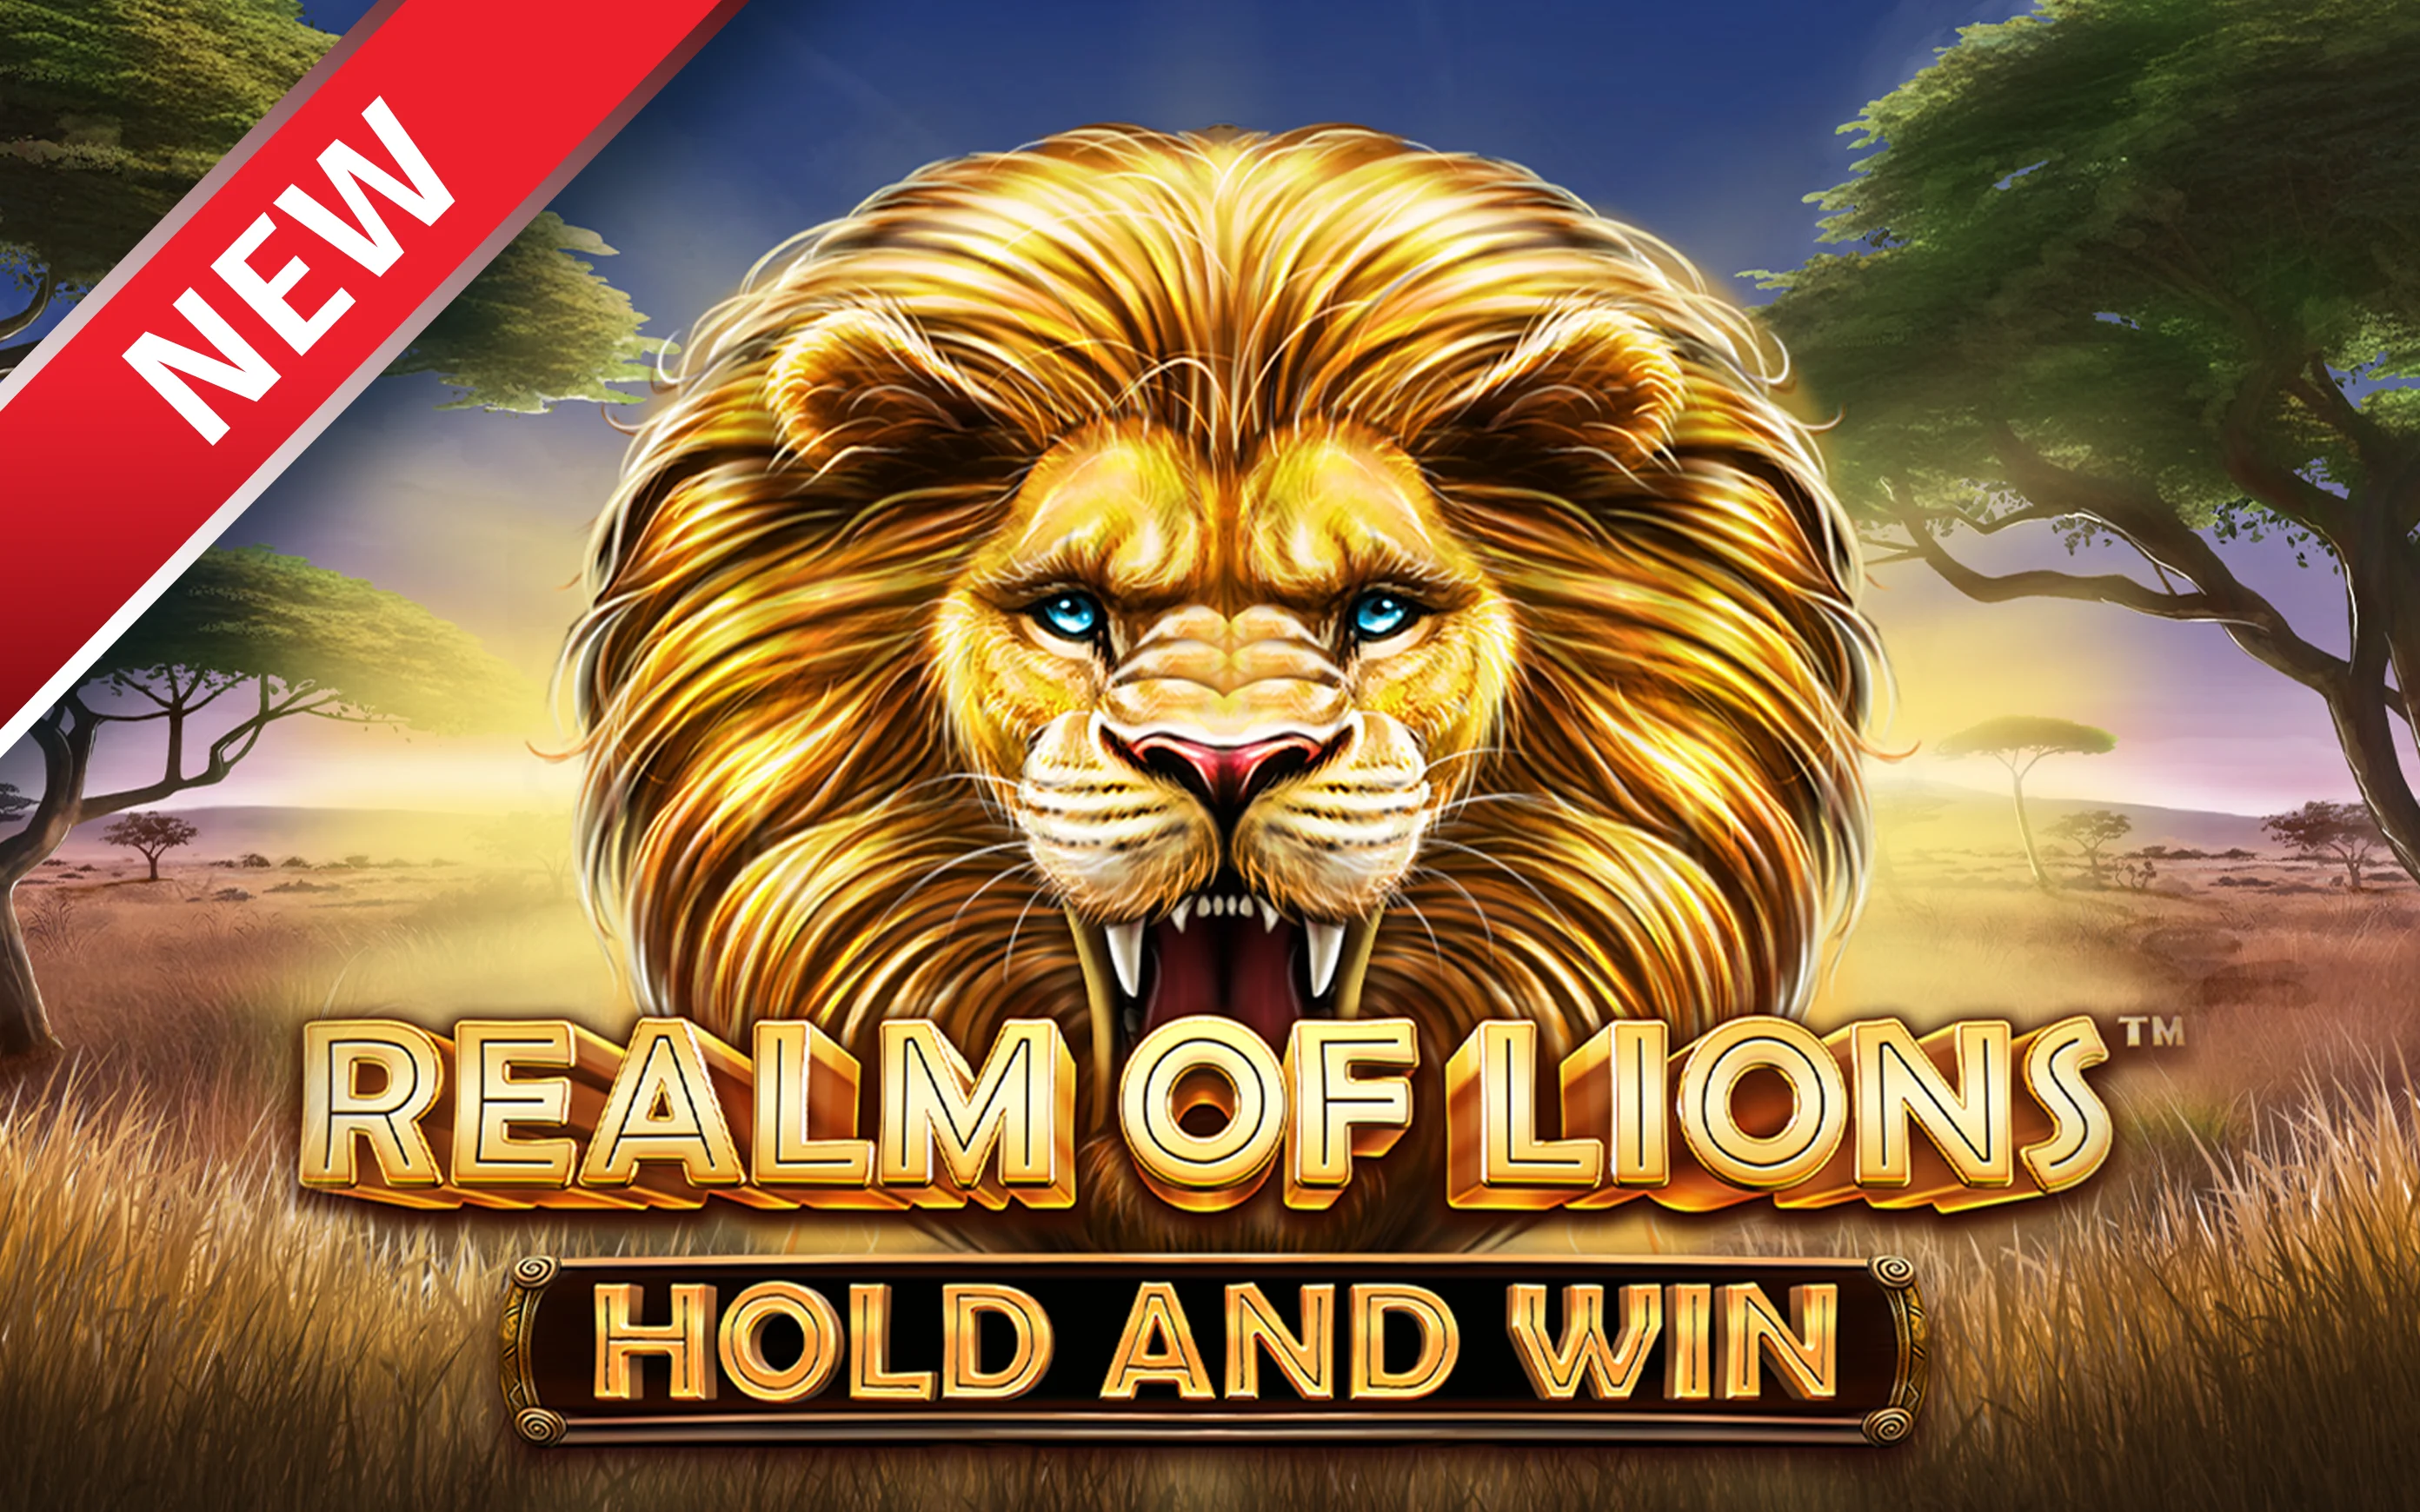 Gioca a Realm of Lions sul casino online Starcasino.be